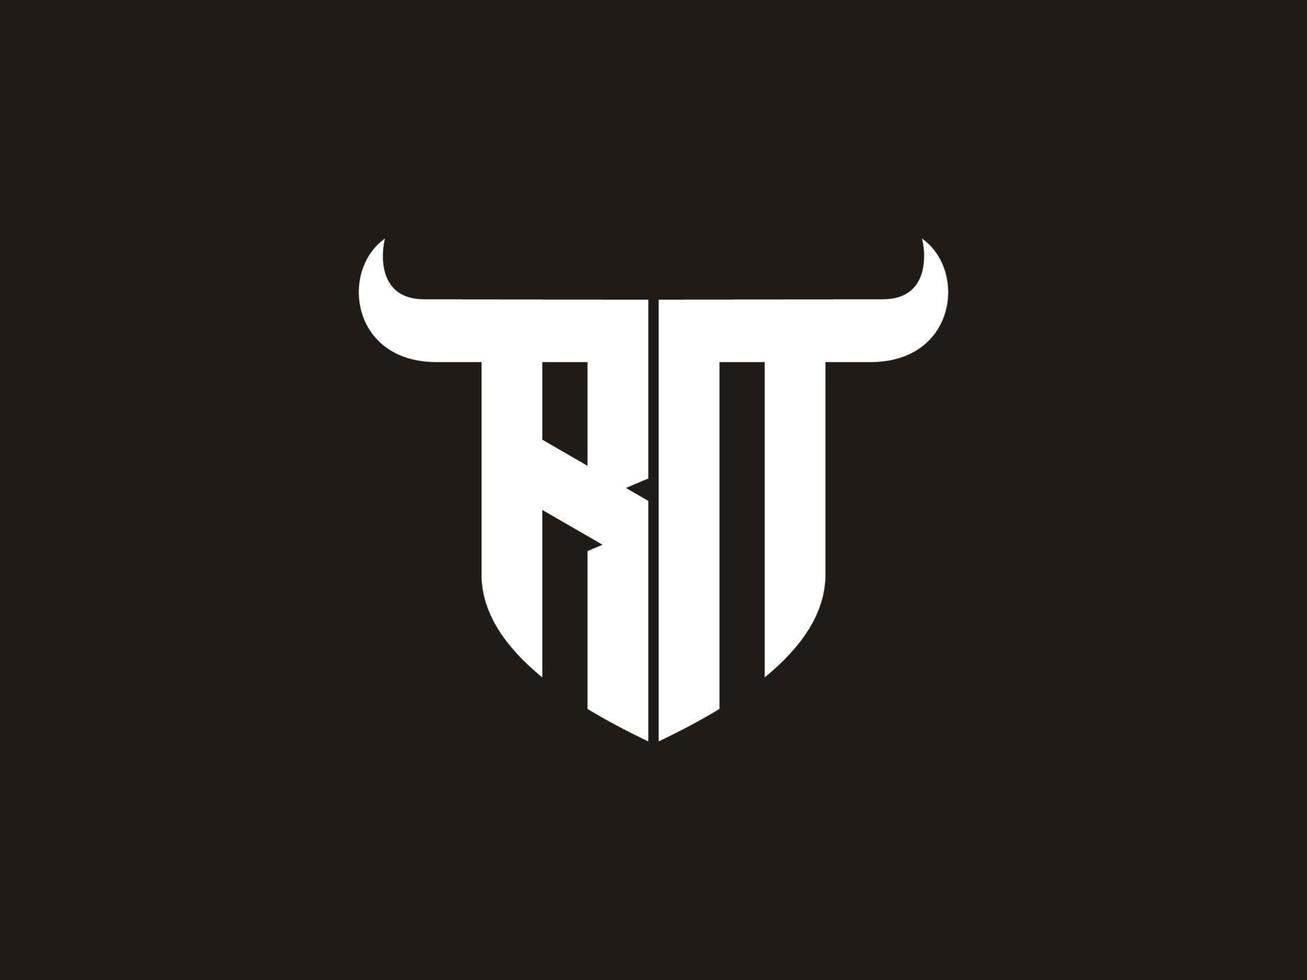 anfängliches rn bull logo design. vektor